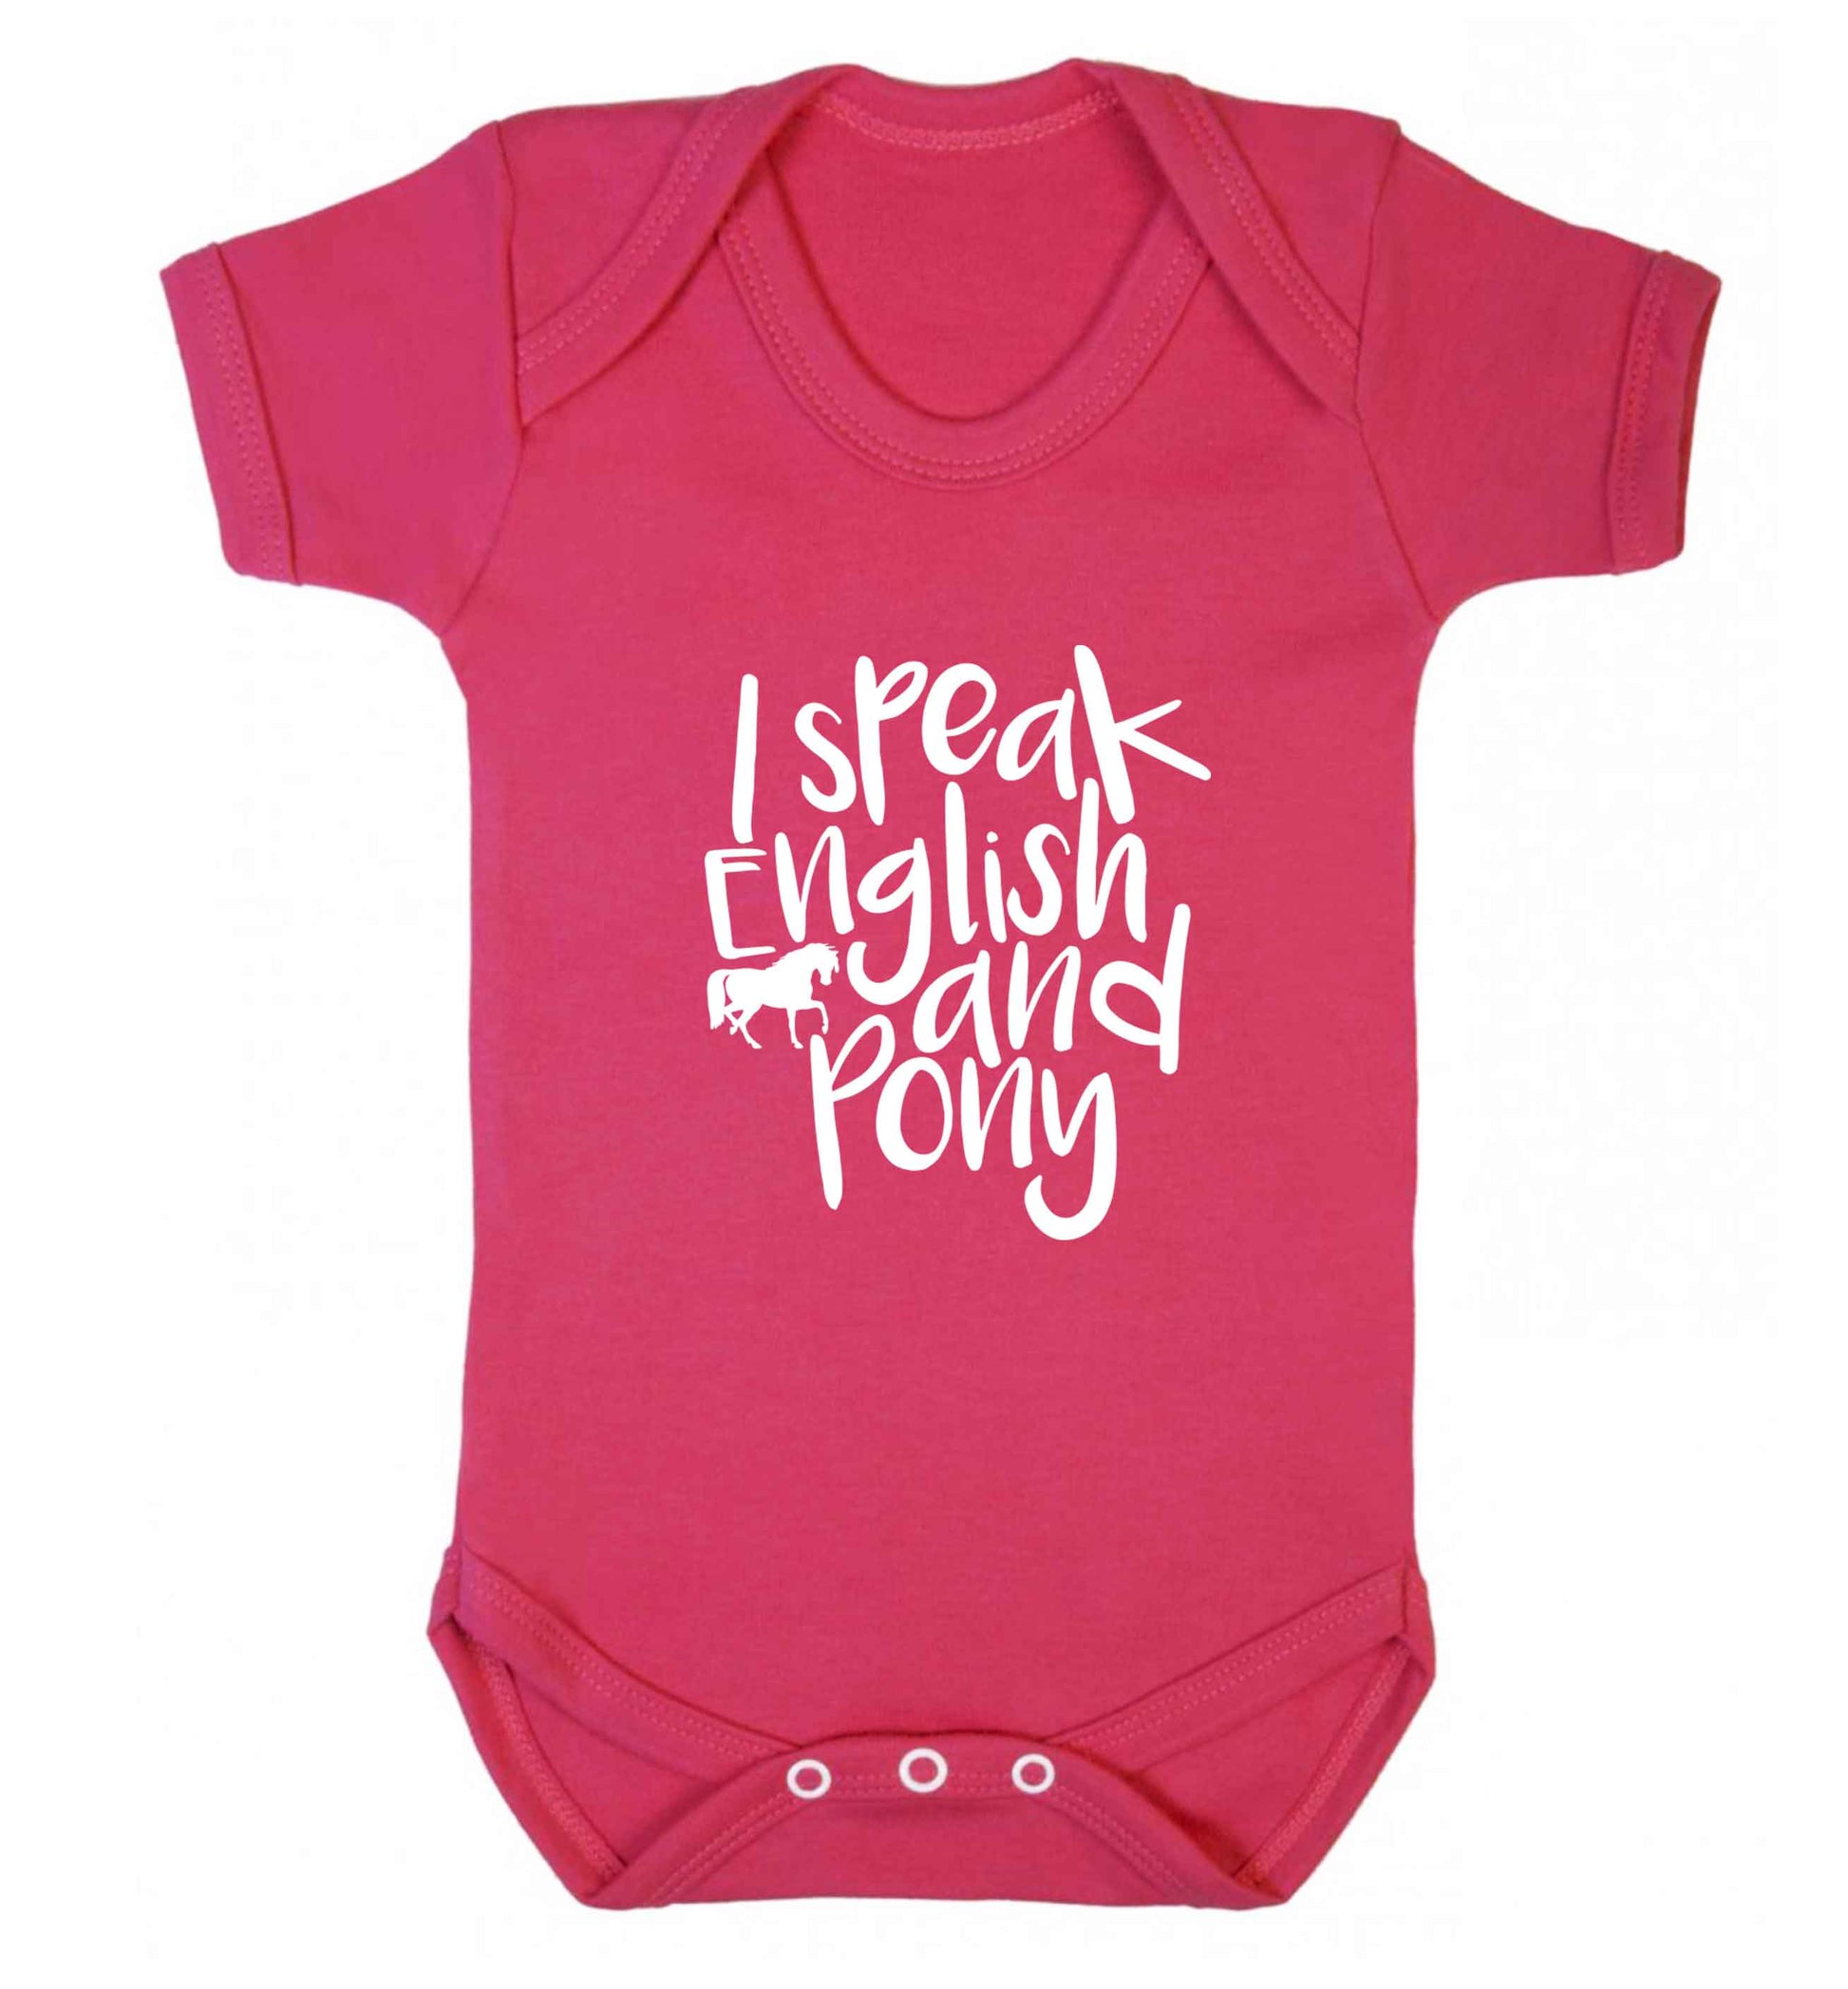 I speak English and pony baby vest dark pink 18-24 months